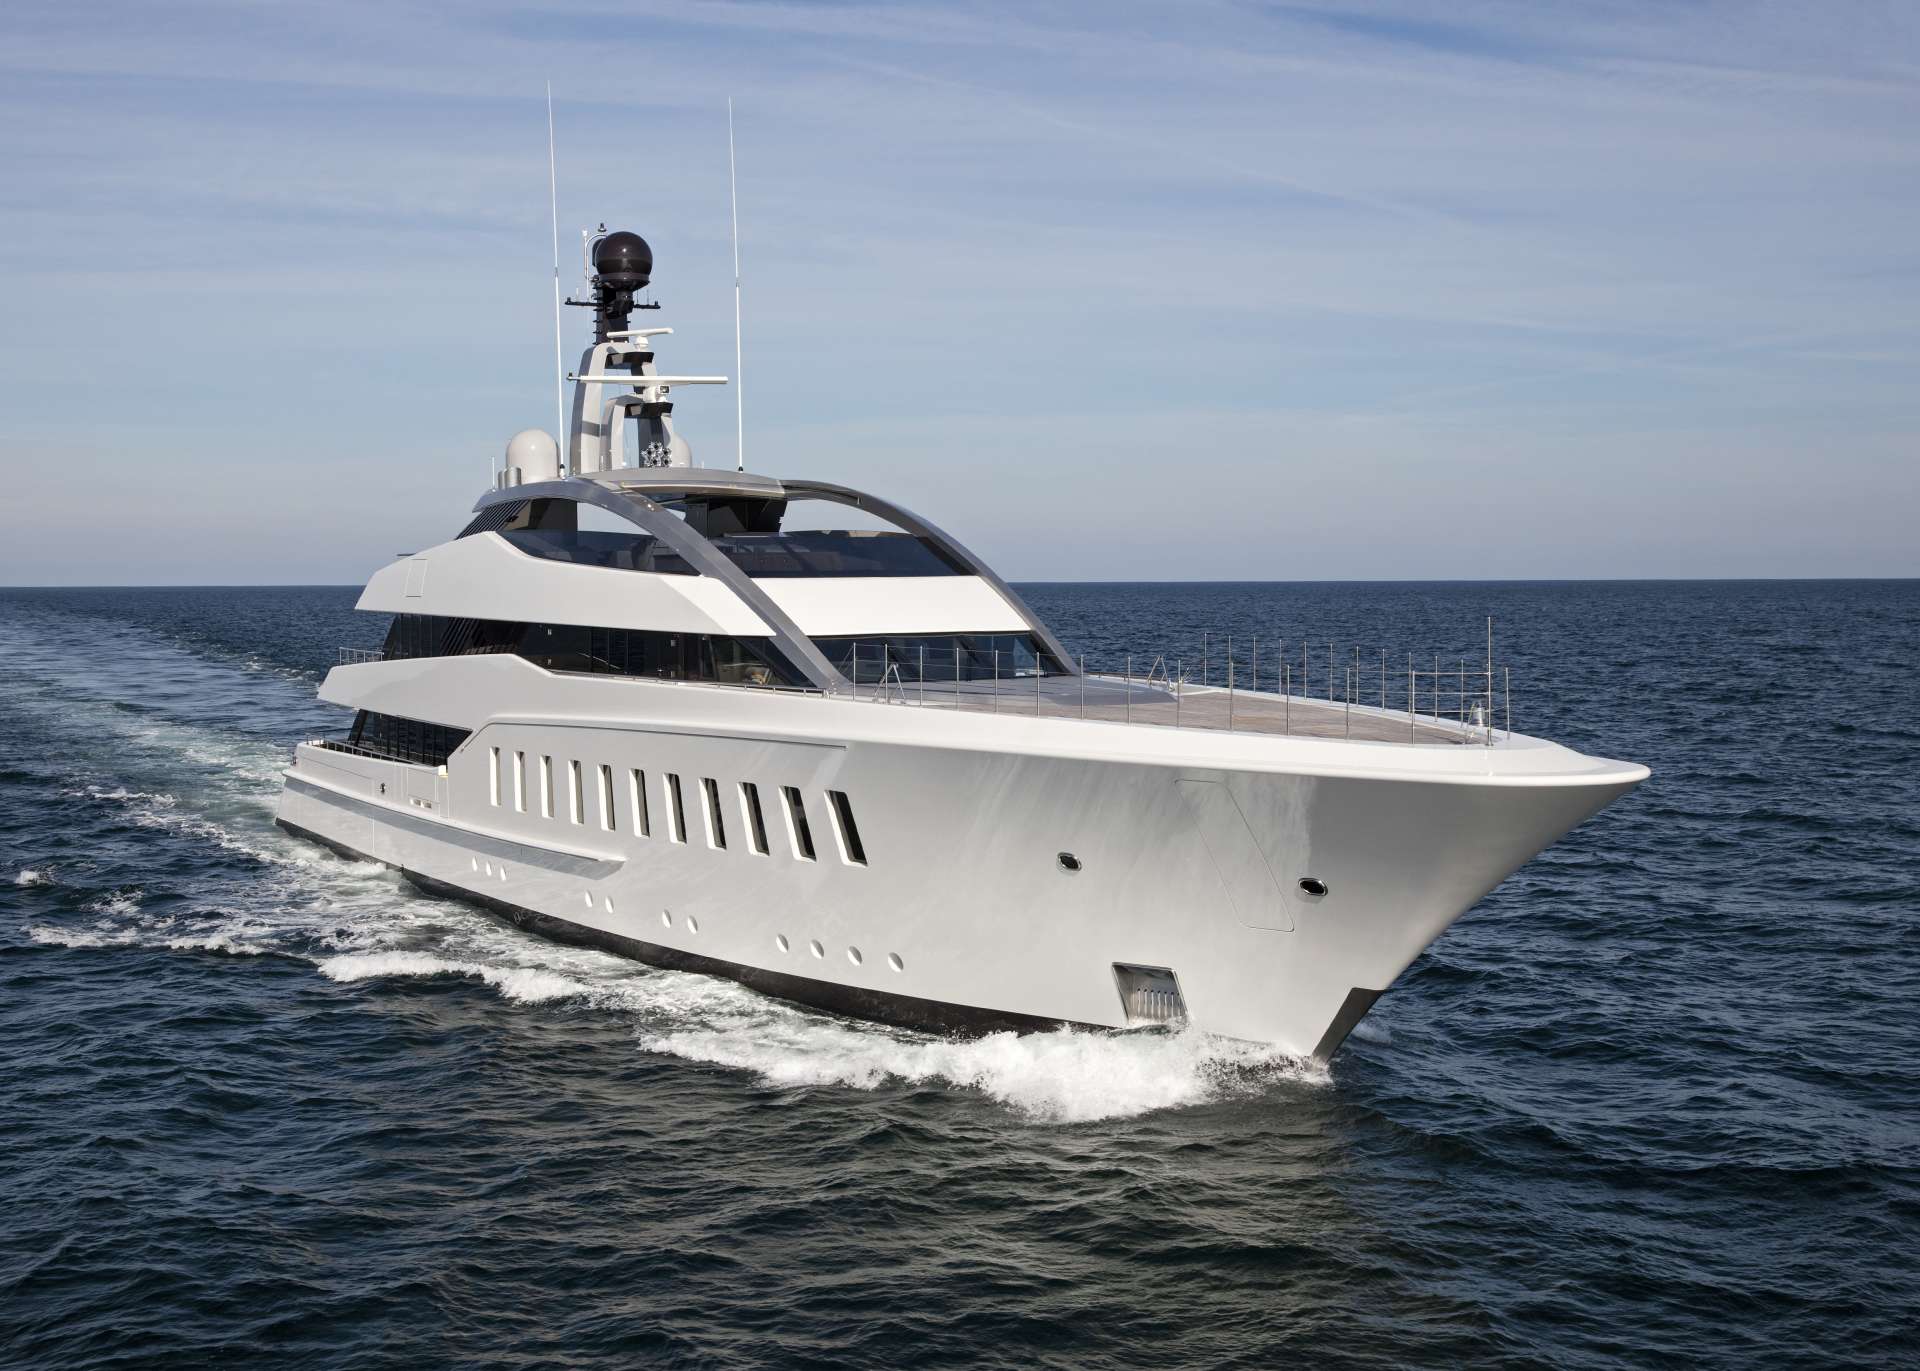 ROCK.IT Yacht Charter Price - Feadship Luxury Yacht Charter